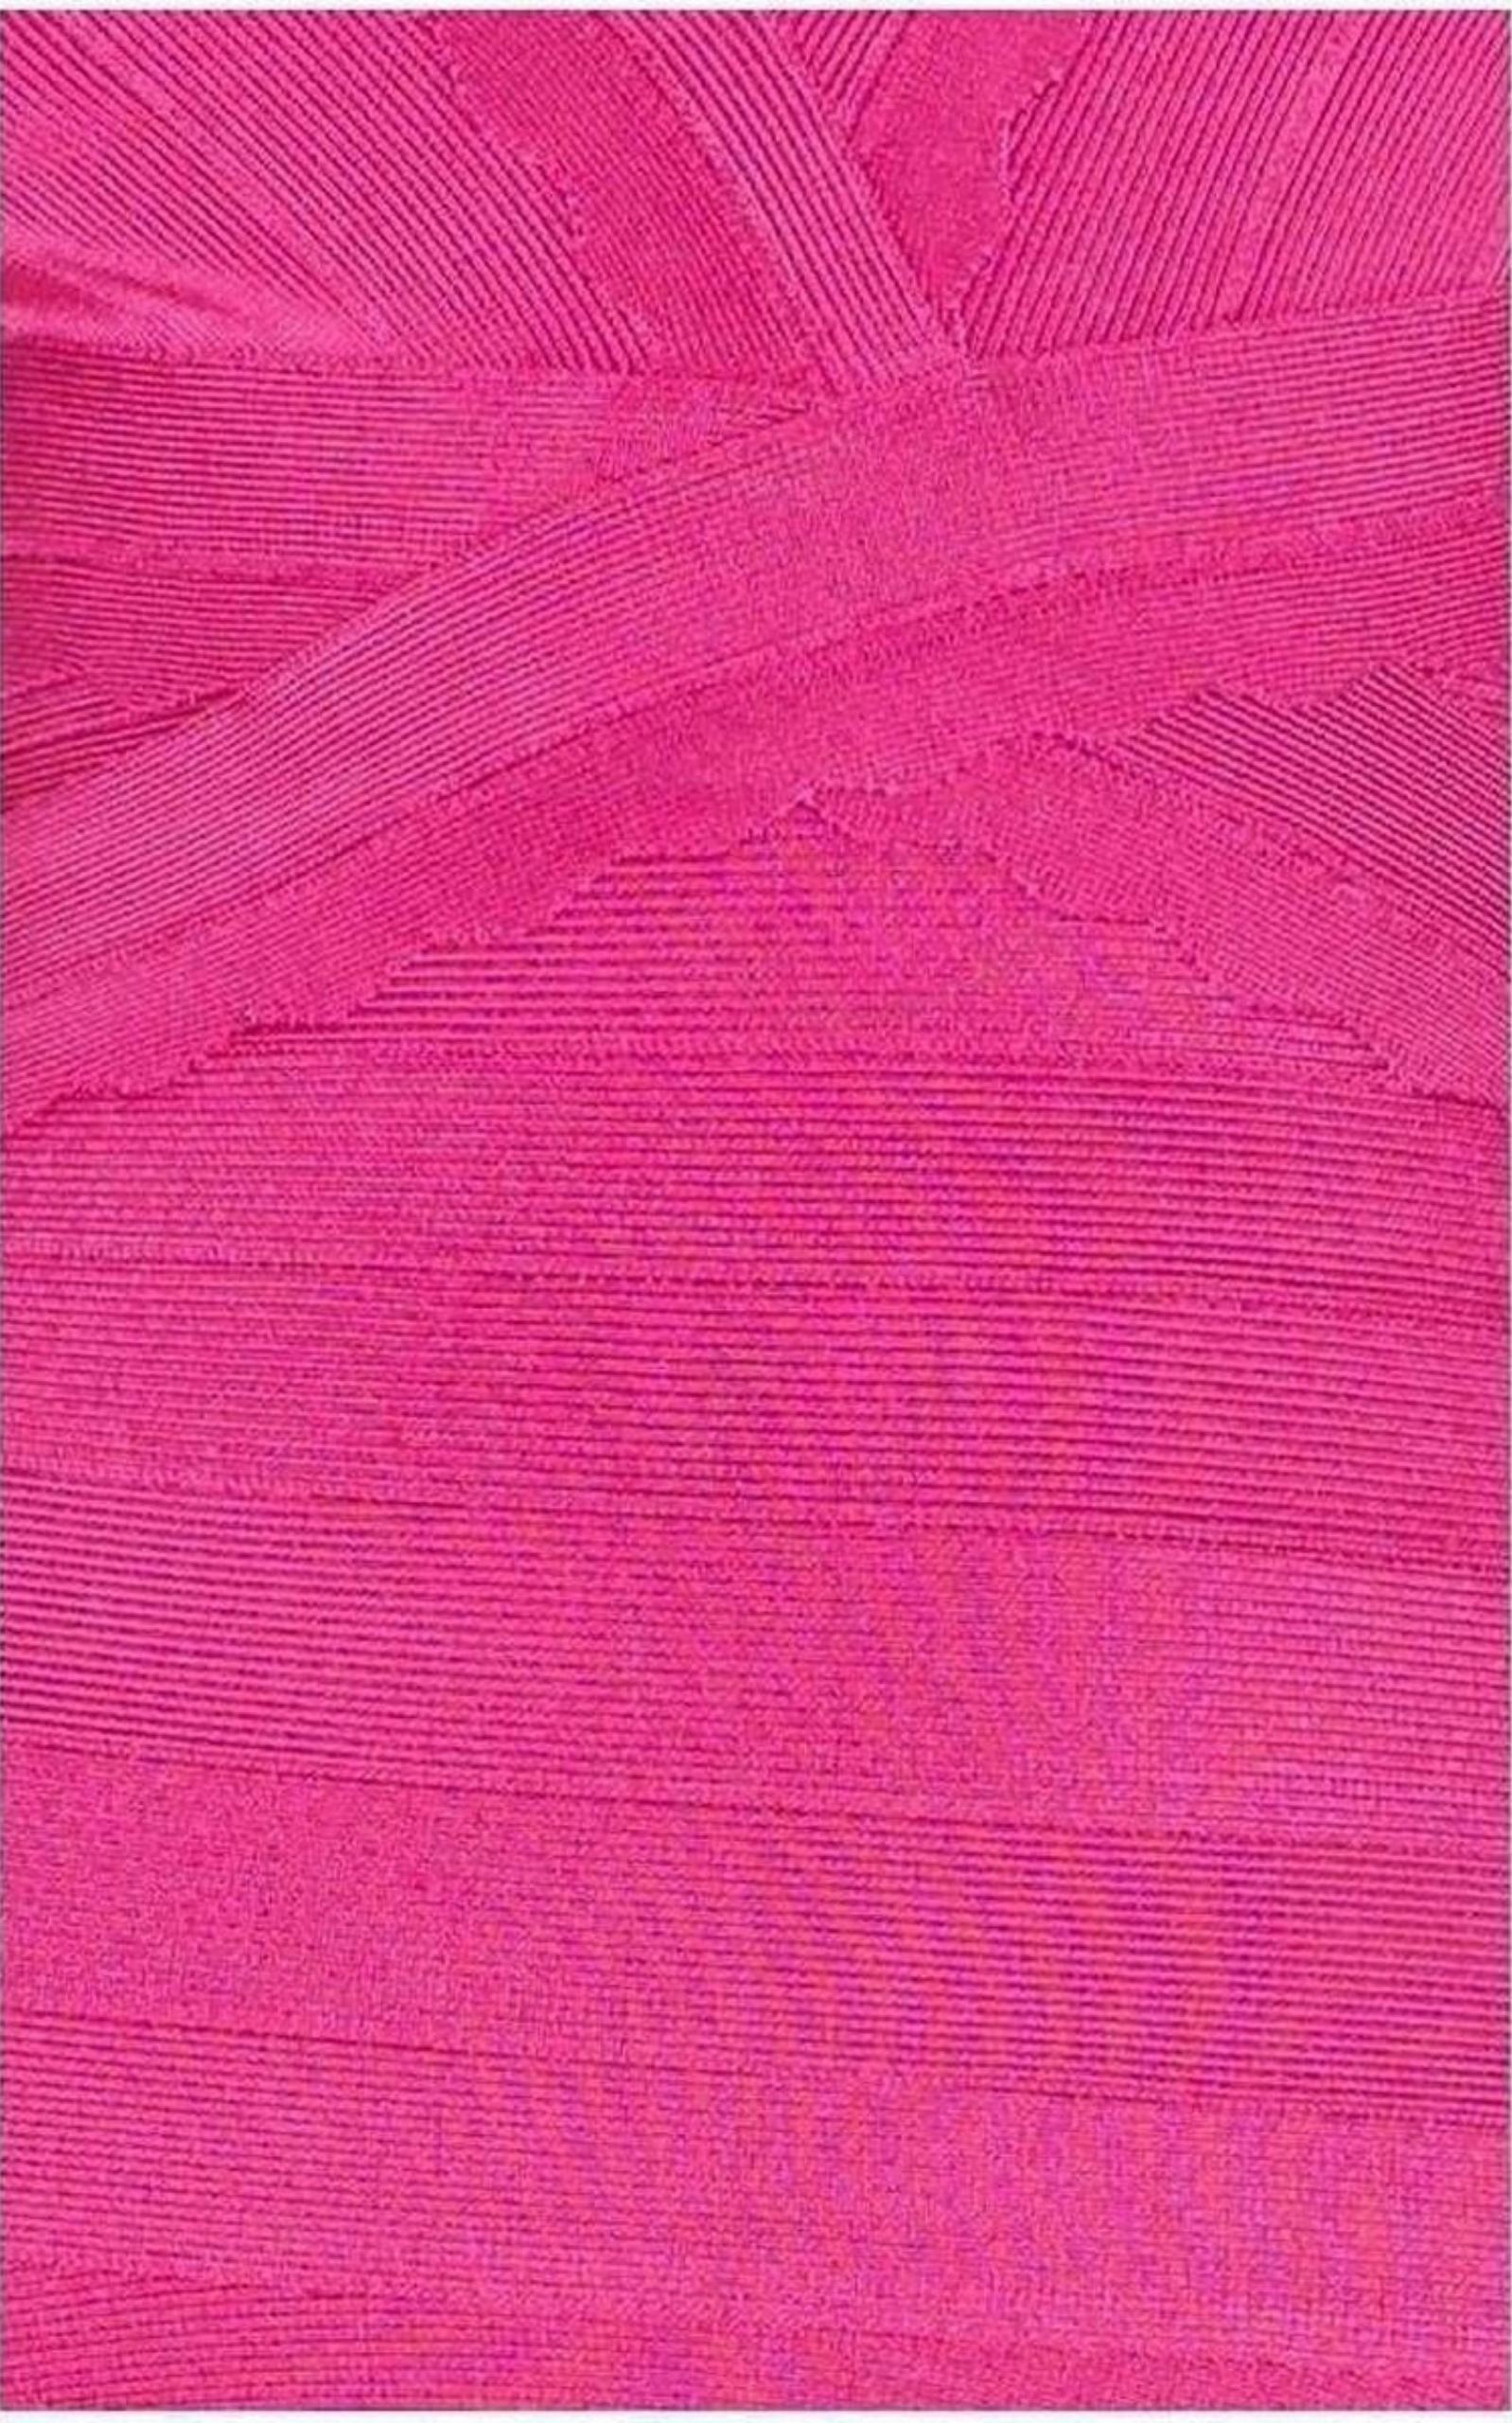  Herve LegerNikayla Scalloped Edge Caprice Pink Dress - Runway Catalog